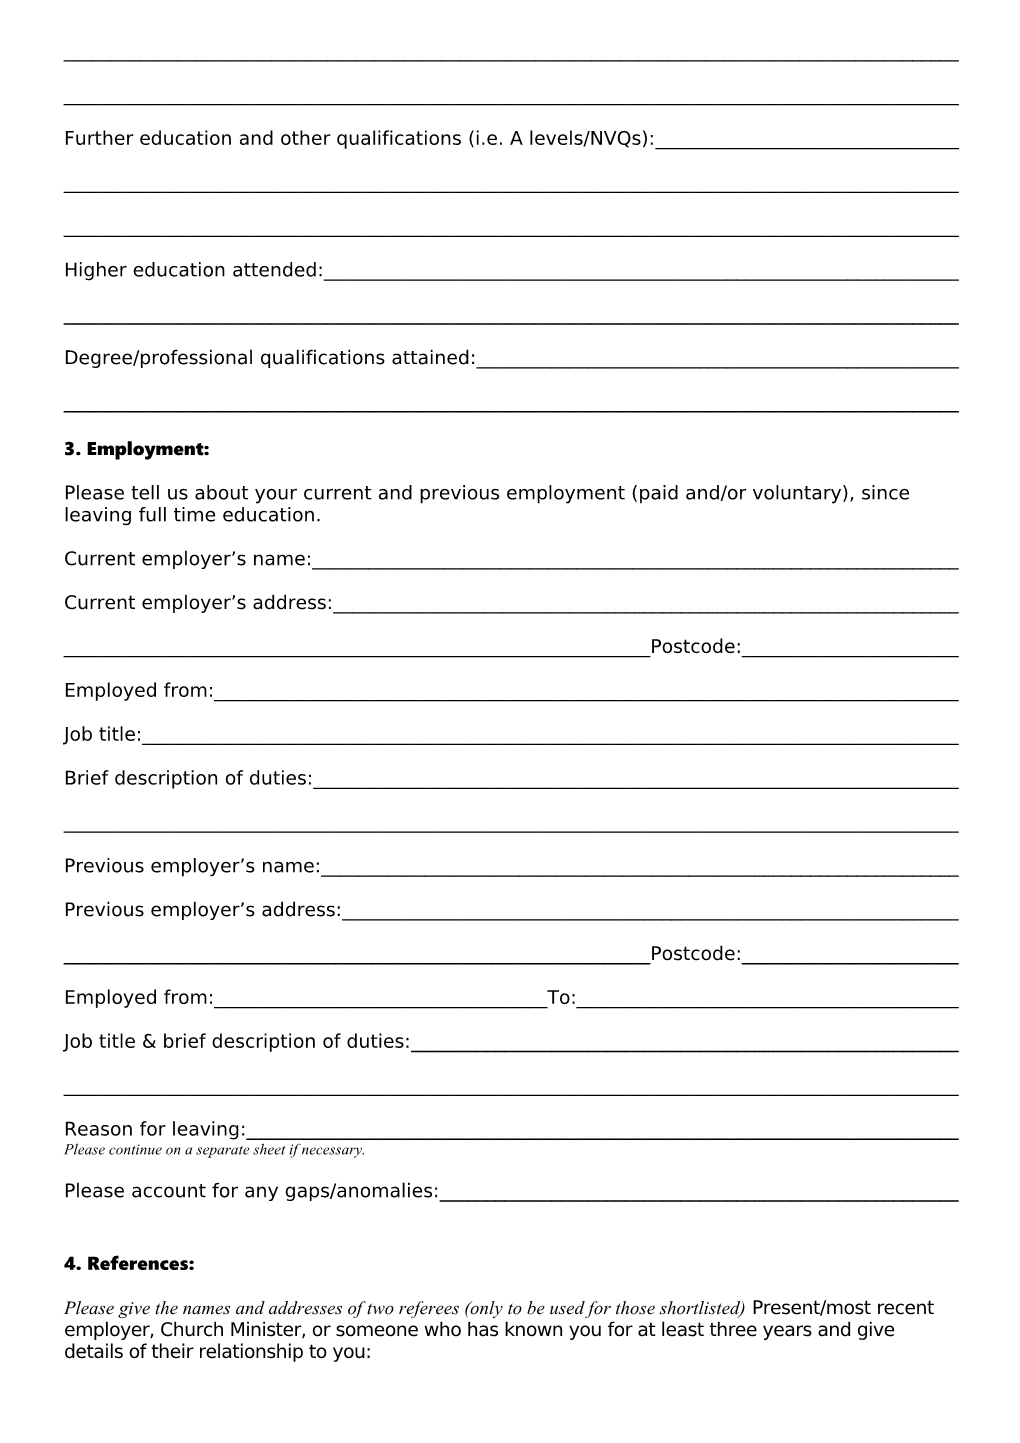 Romania Application Form